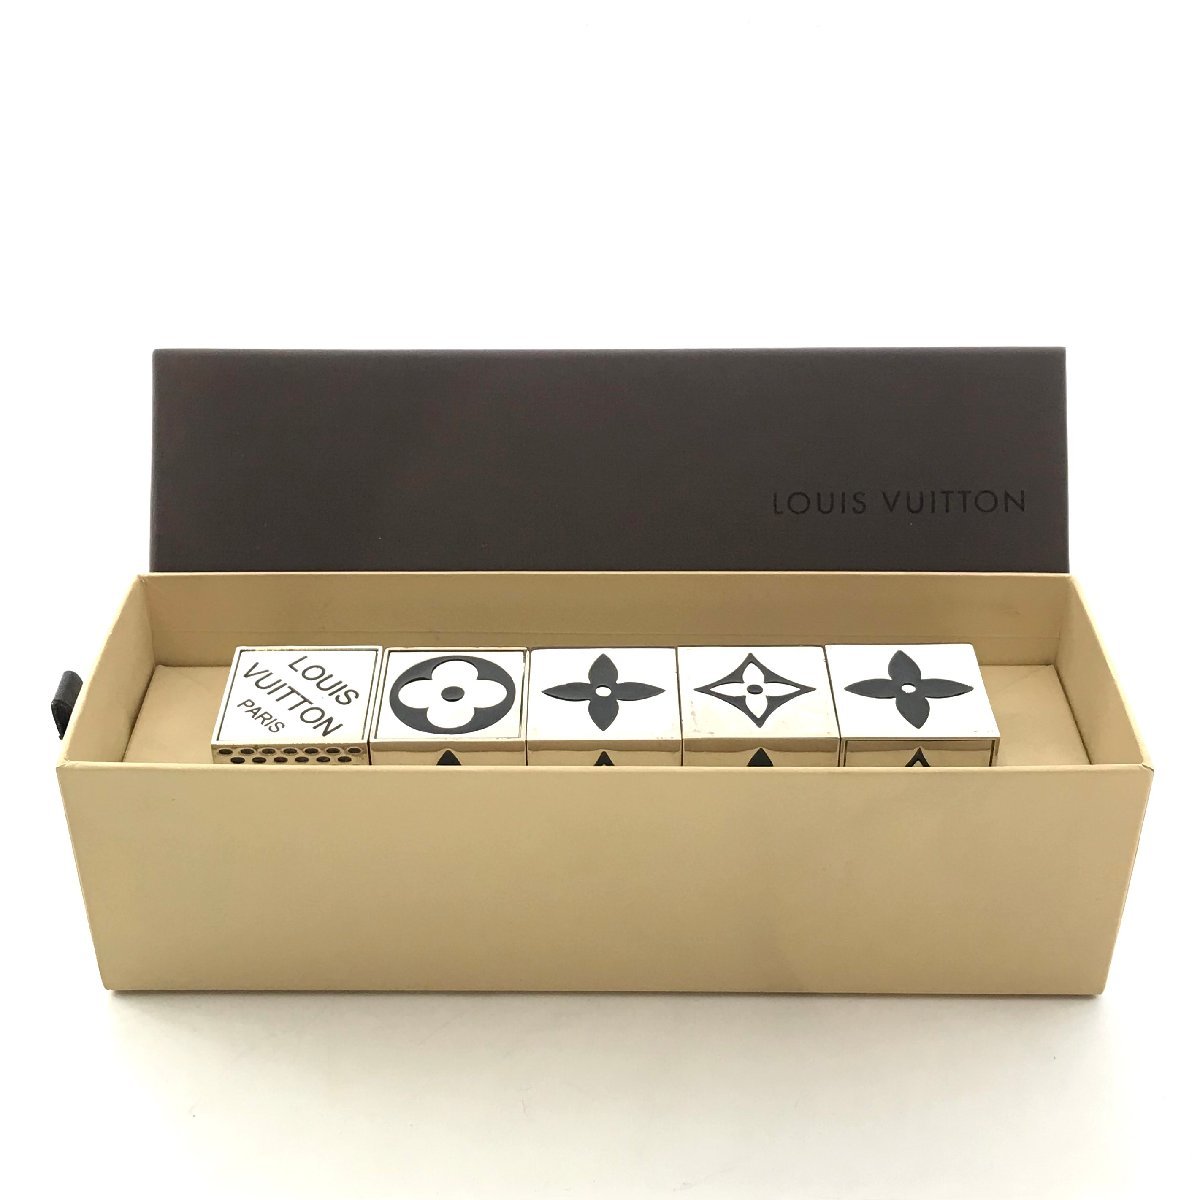 LOUISVUITTON ルイヴィトン モノグラム キューブ ゲーム ダイス メタル 箱付き 置物 限定品 美品 k1159